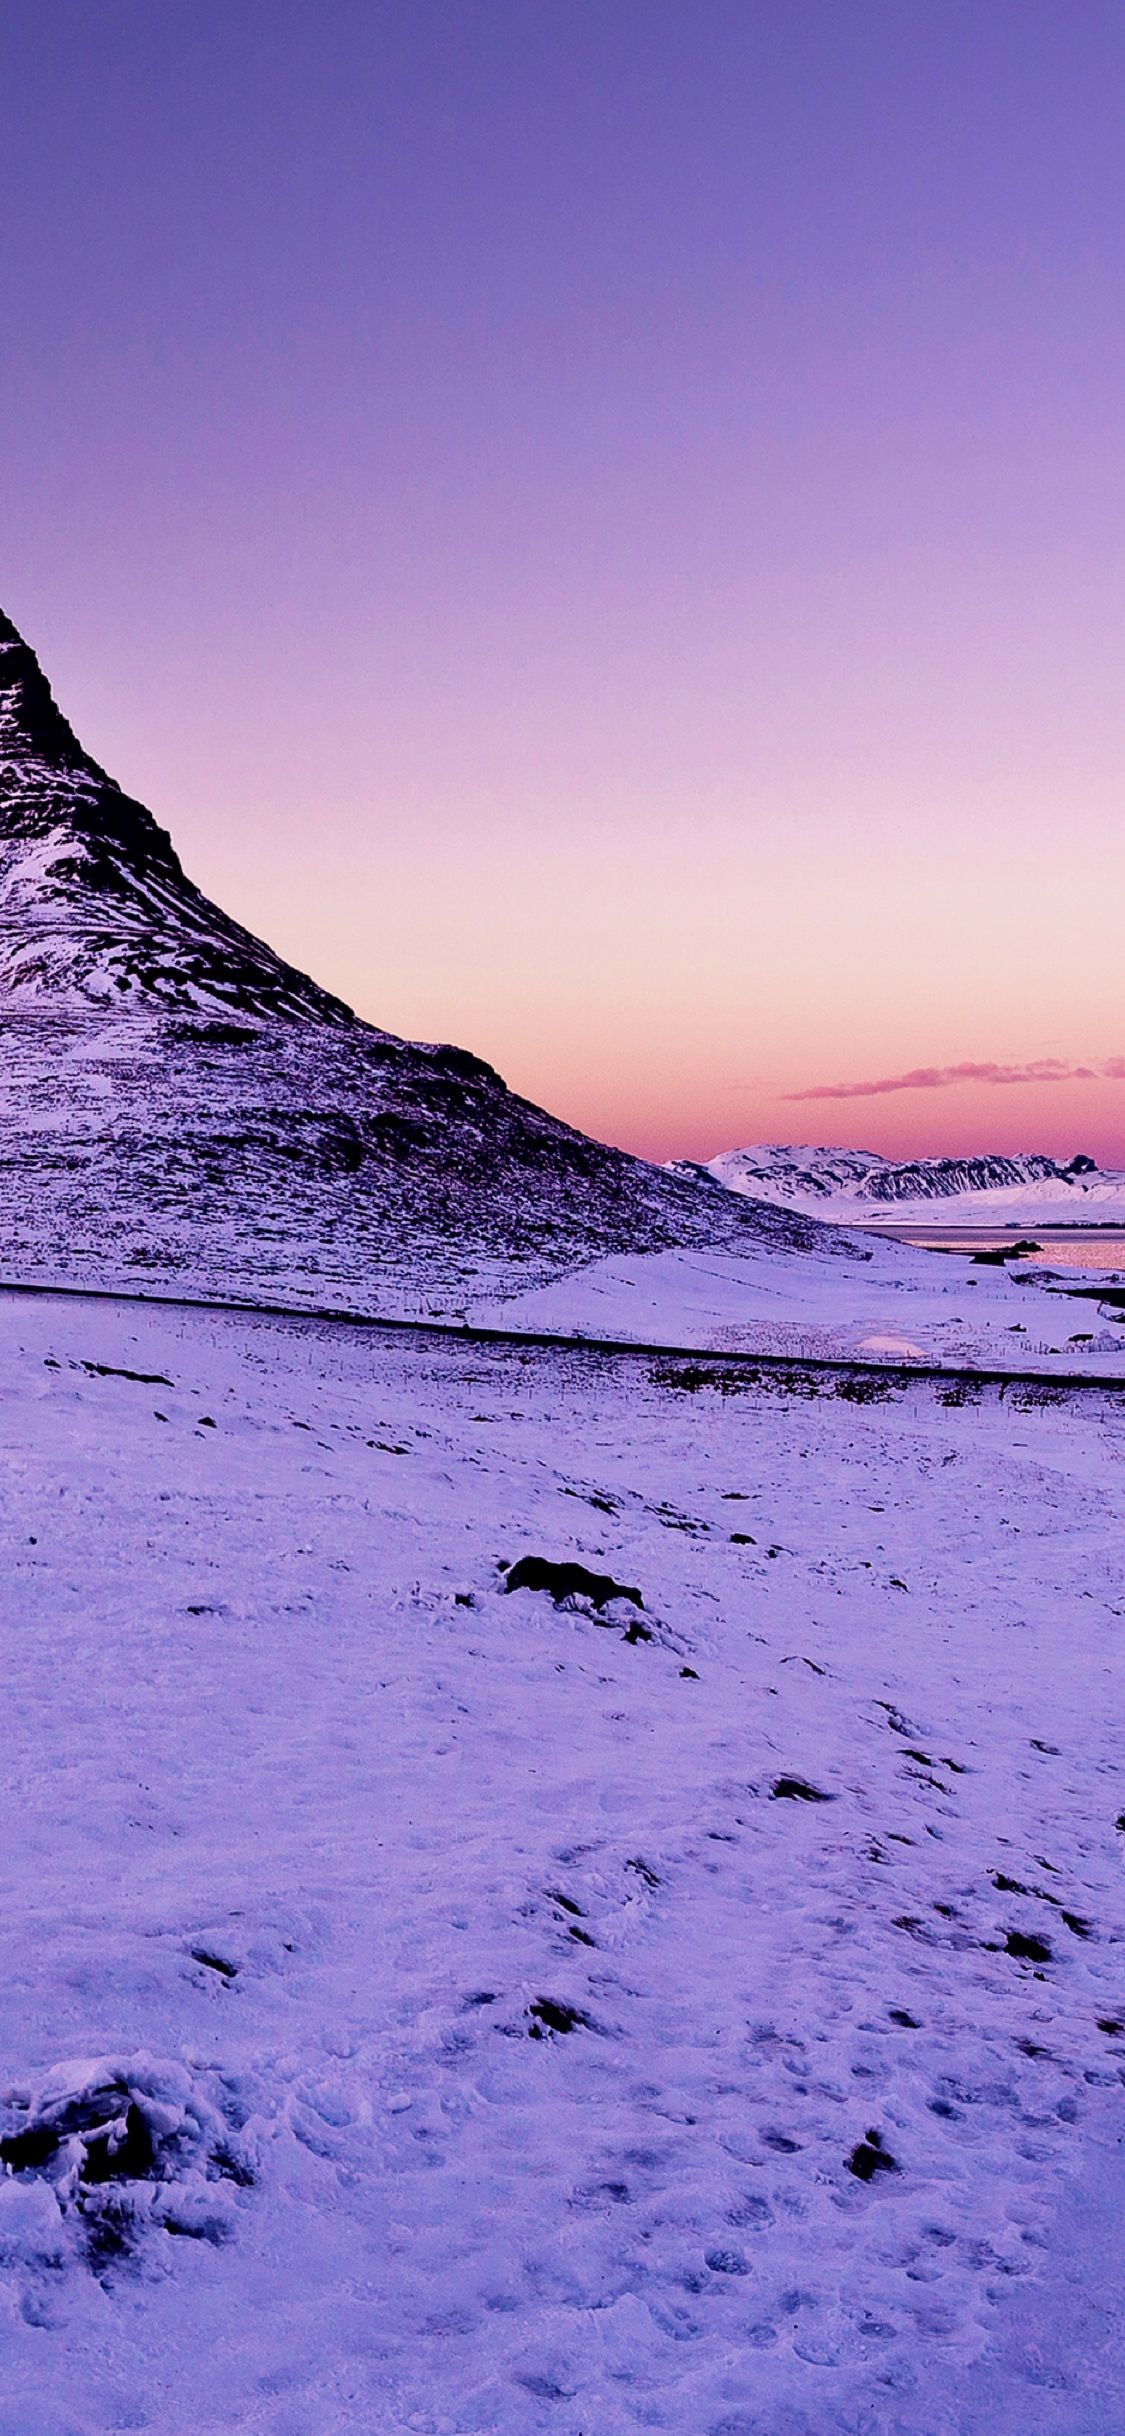 1125x2436 Snowy purple mountain Nature Wallpaper, Landscape Photography, Iphone  Wallpapers, Lilac, Beachwear Fashion